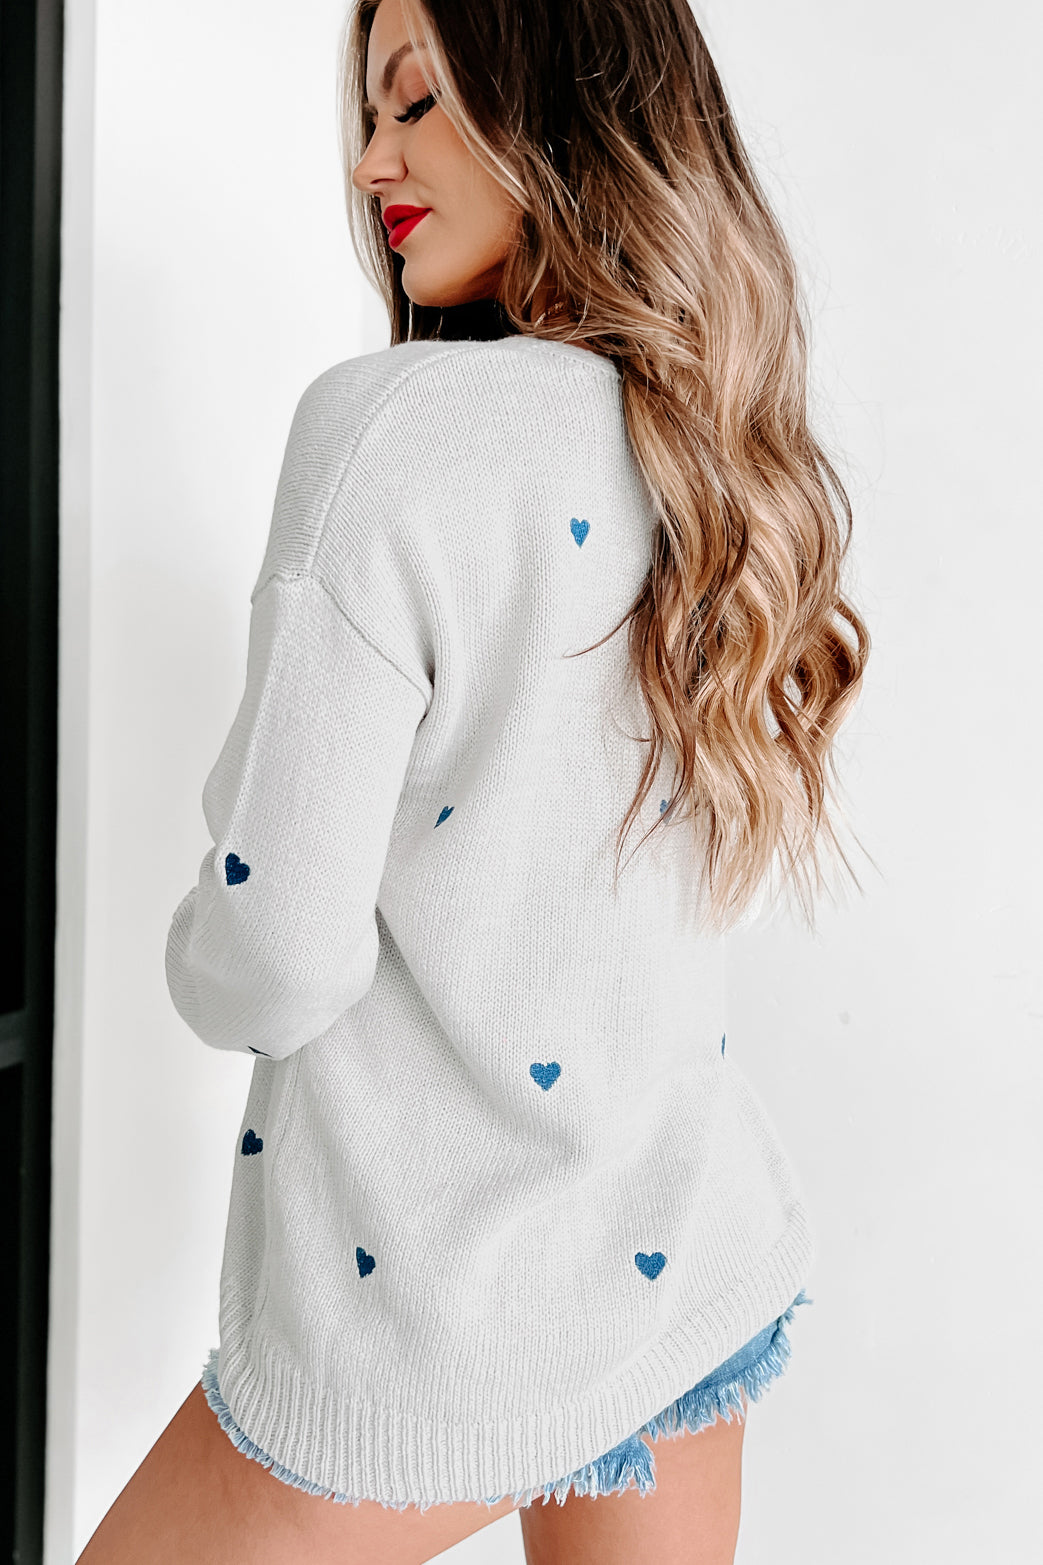 Intense Feelings Embroidered Heart Sweater (Heather Grey) - NanaMacs